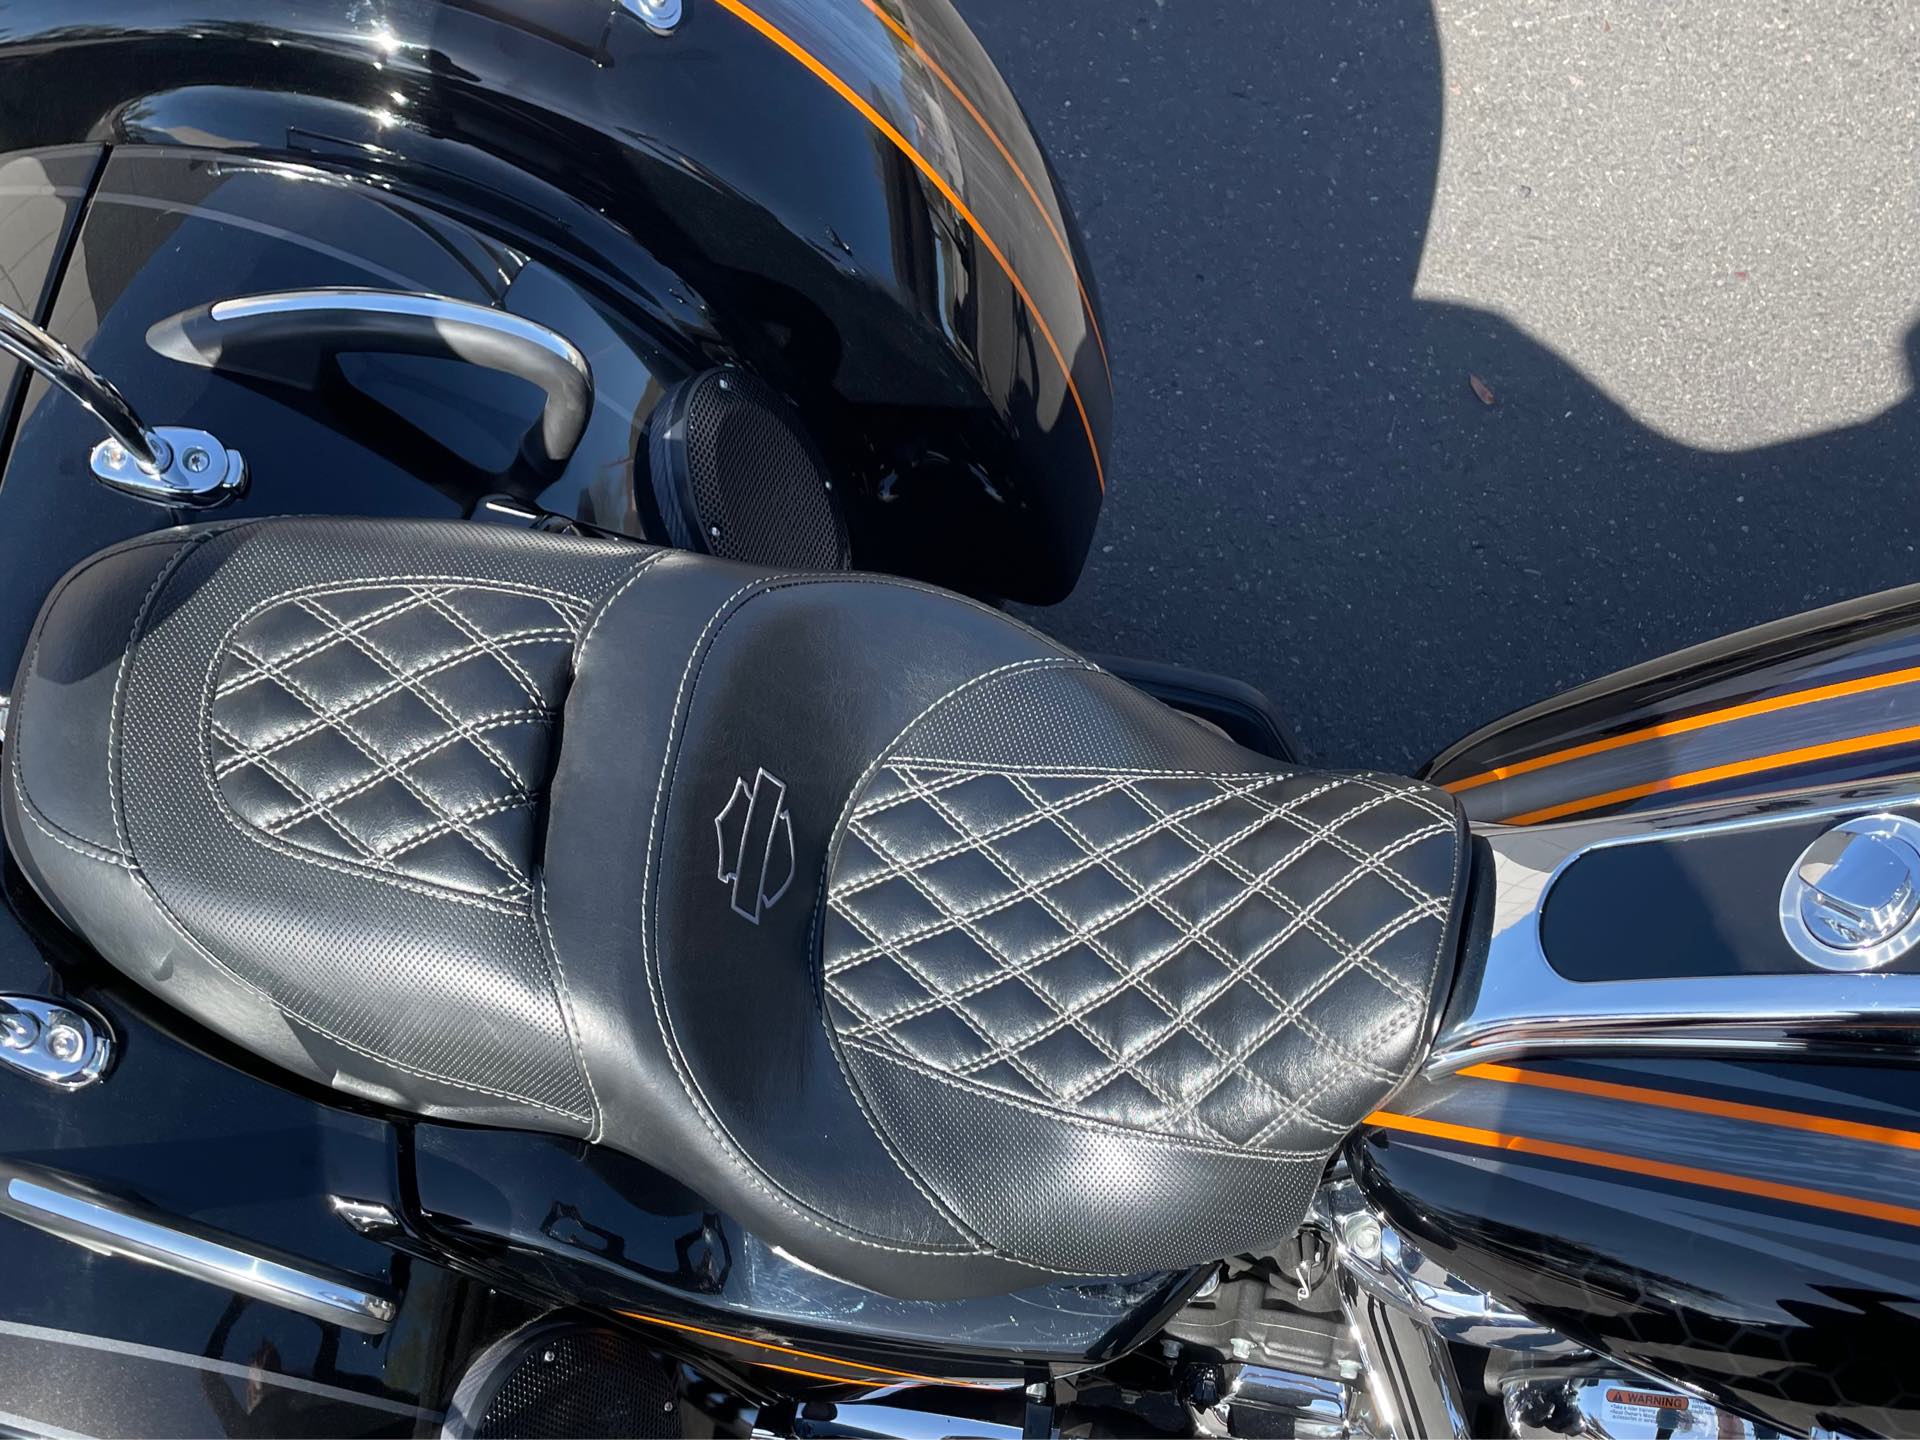 2019 Harley-Davidson Trike Freewheeler at Buddy Stubbs Arizona Harley-Davidson